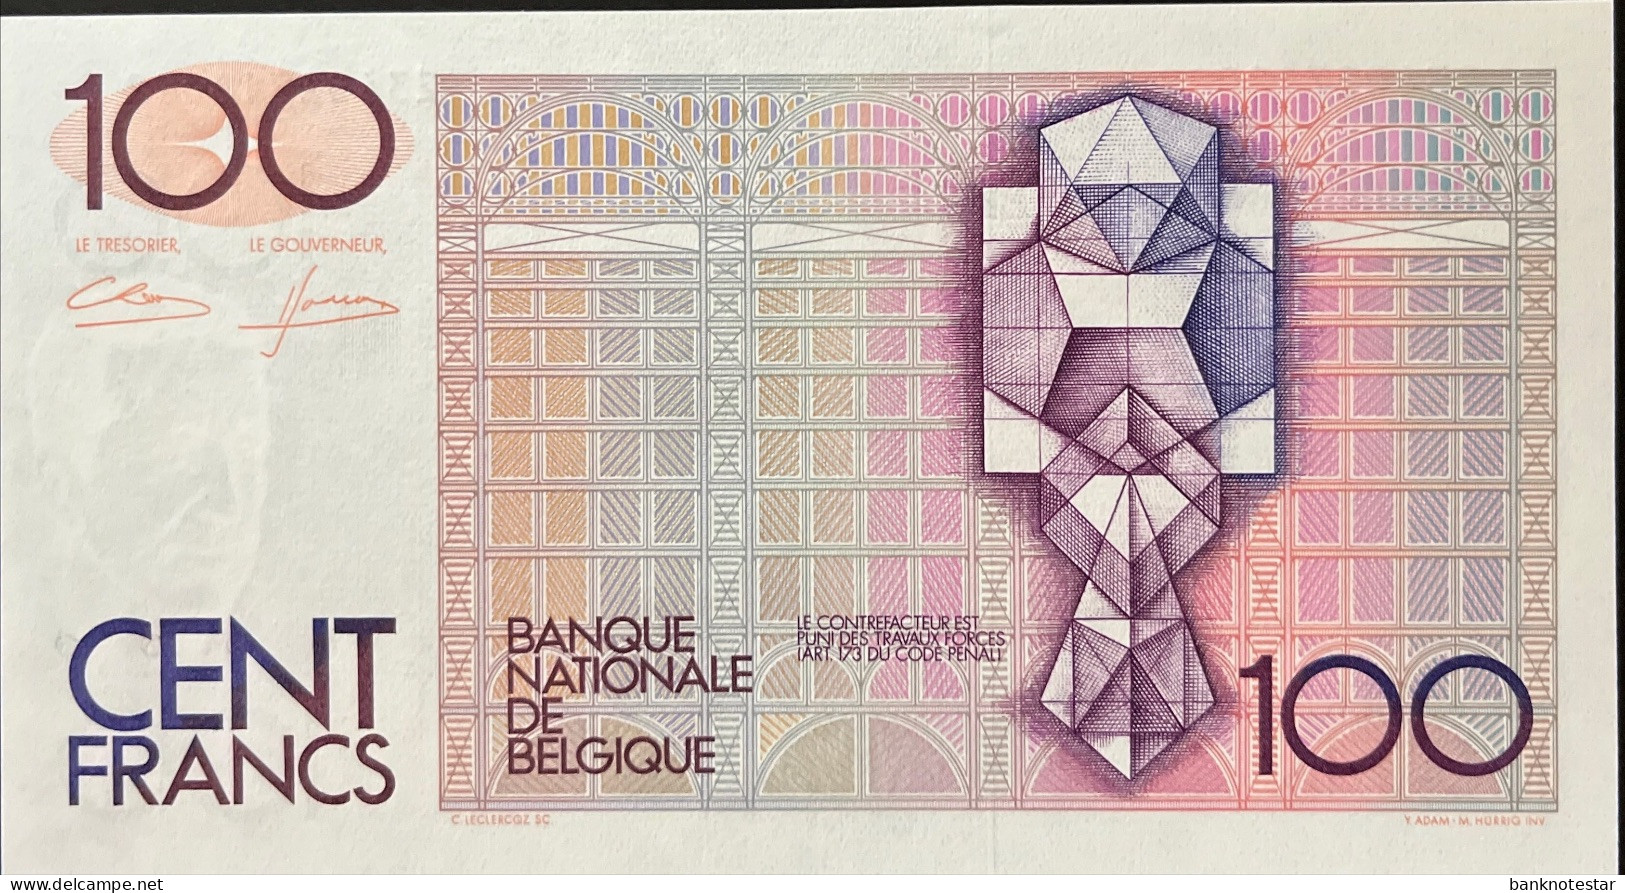 Belgium 100 Francs, P-142 (1982) - UNC - Signature 4+12 - 100 Francos